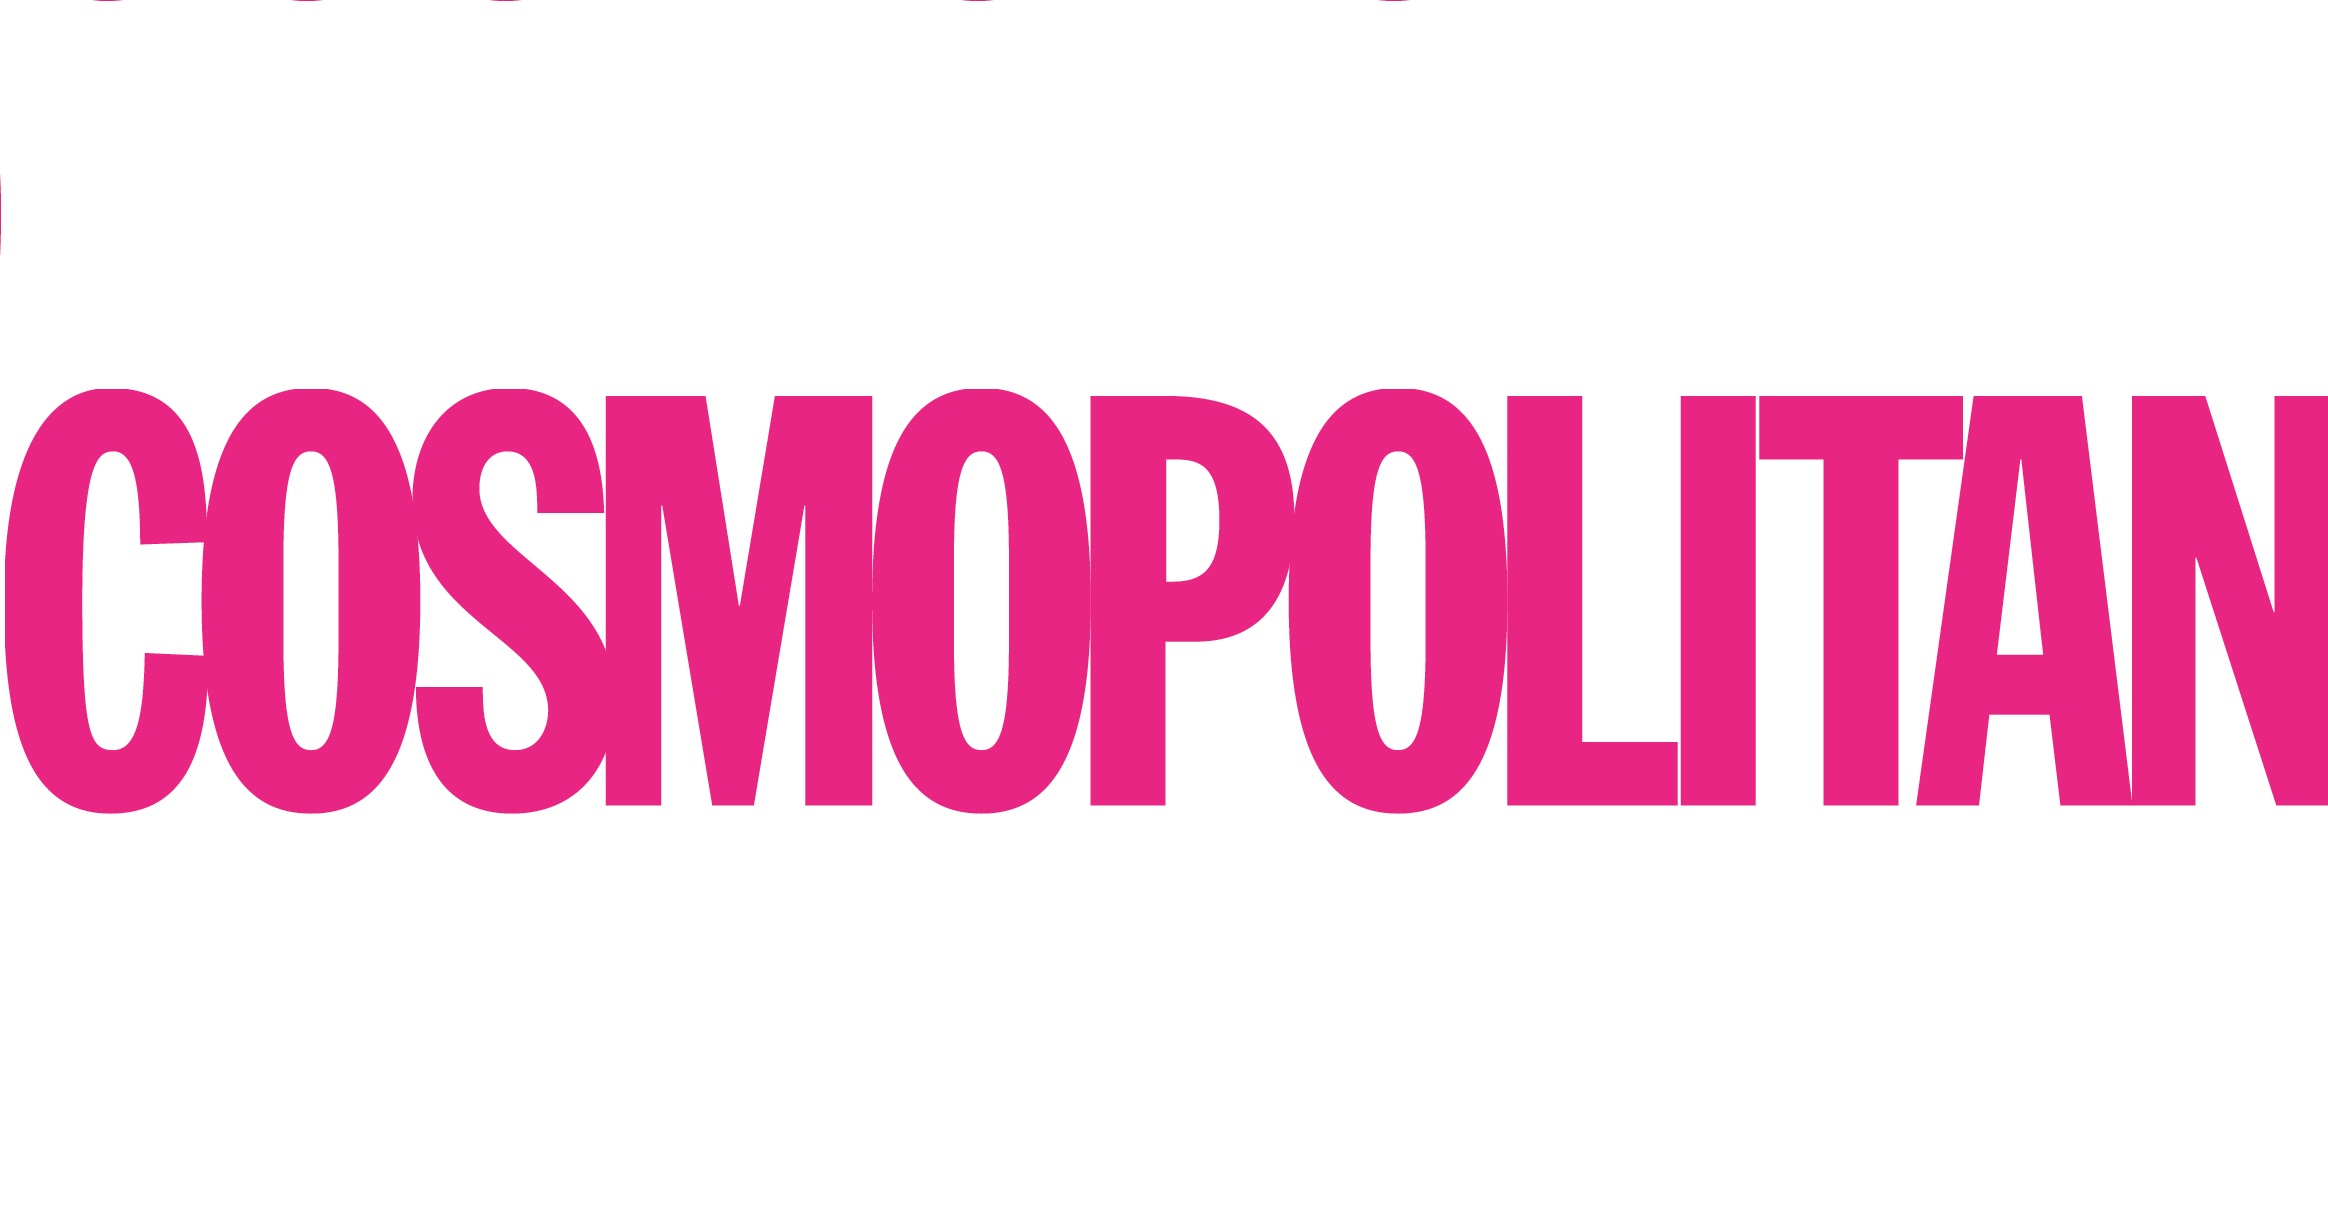 сosmopolitan-logo.jpg